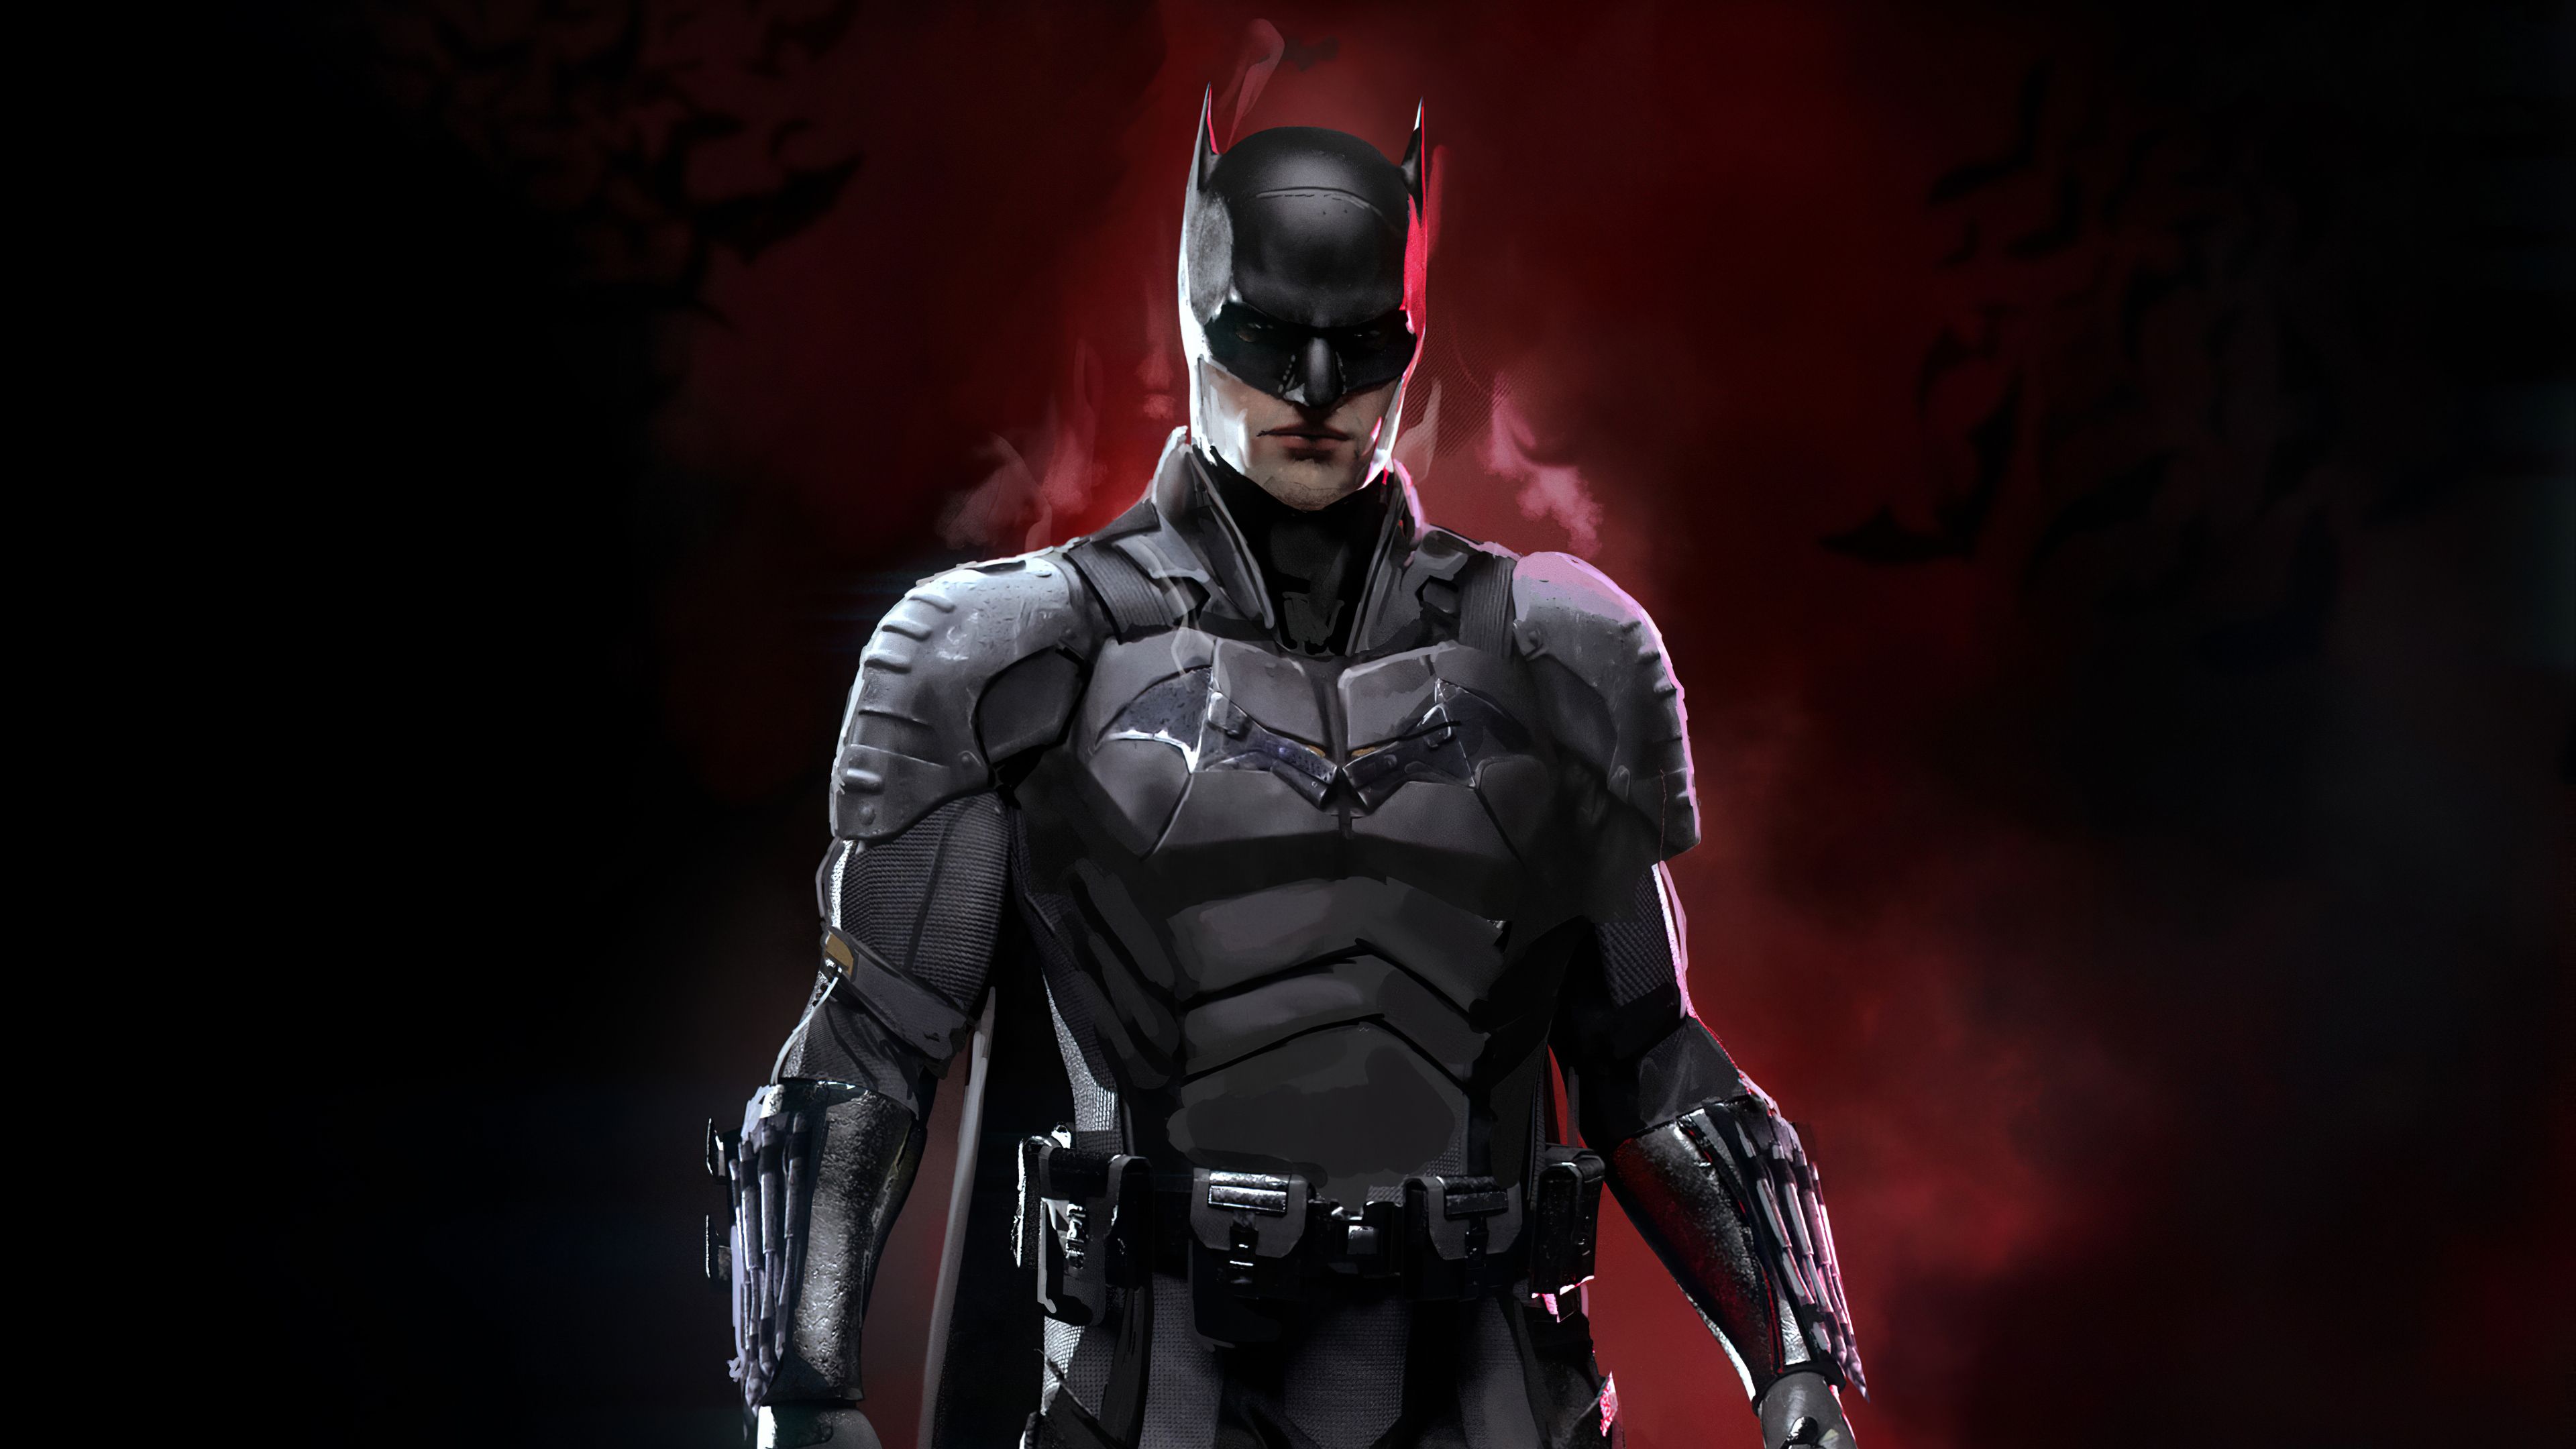 4k Batman 2020 Artwork, HD Superheroes, 4k Wallpaper, Image